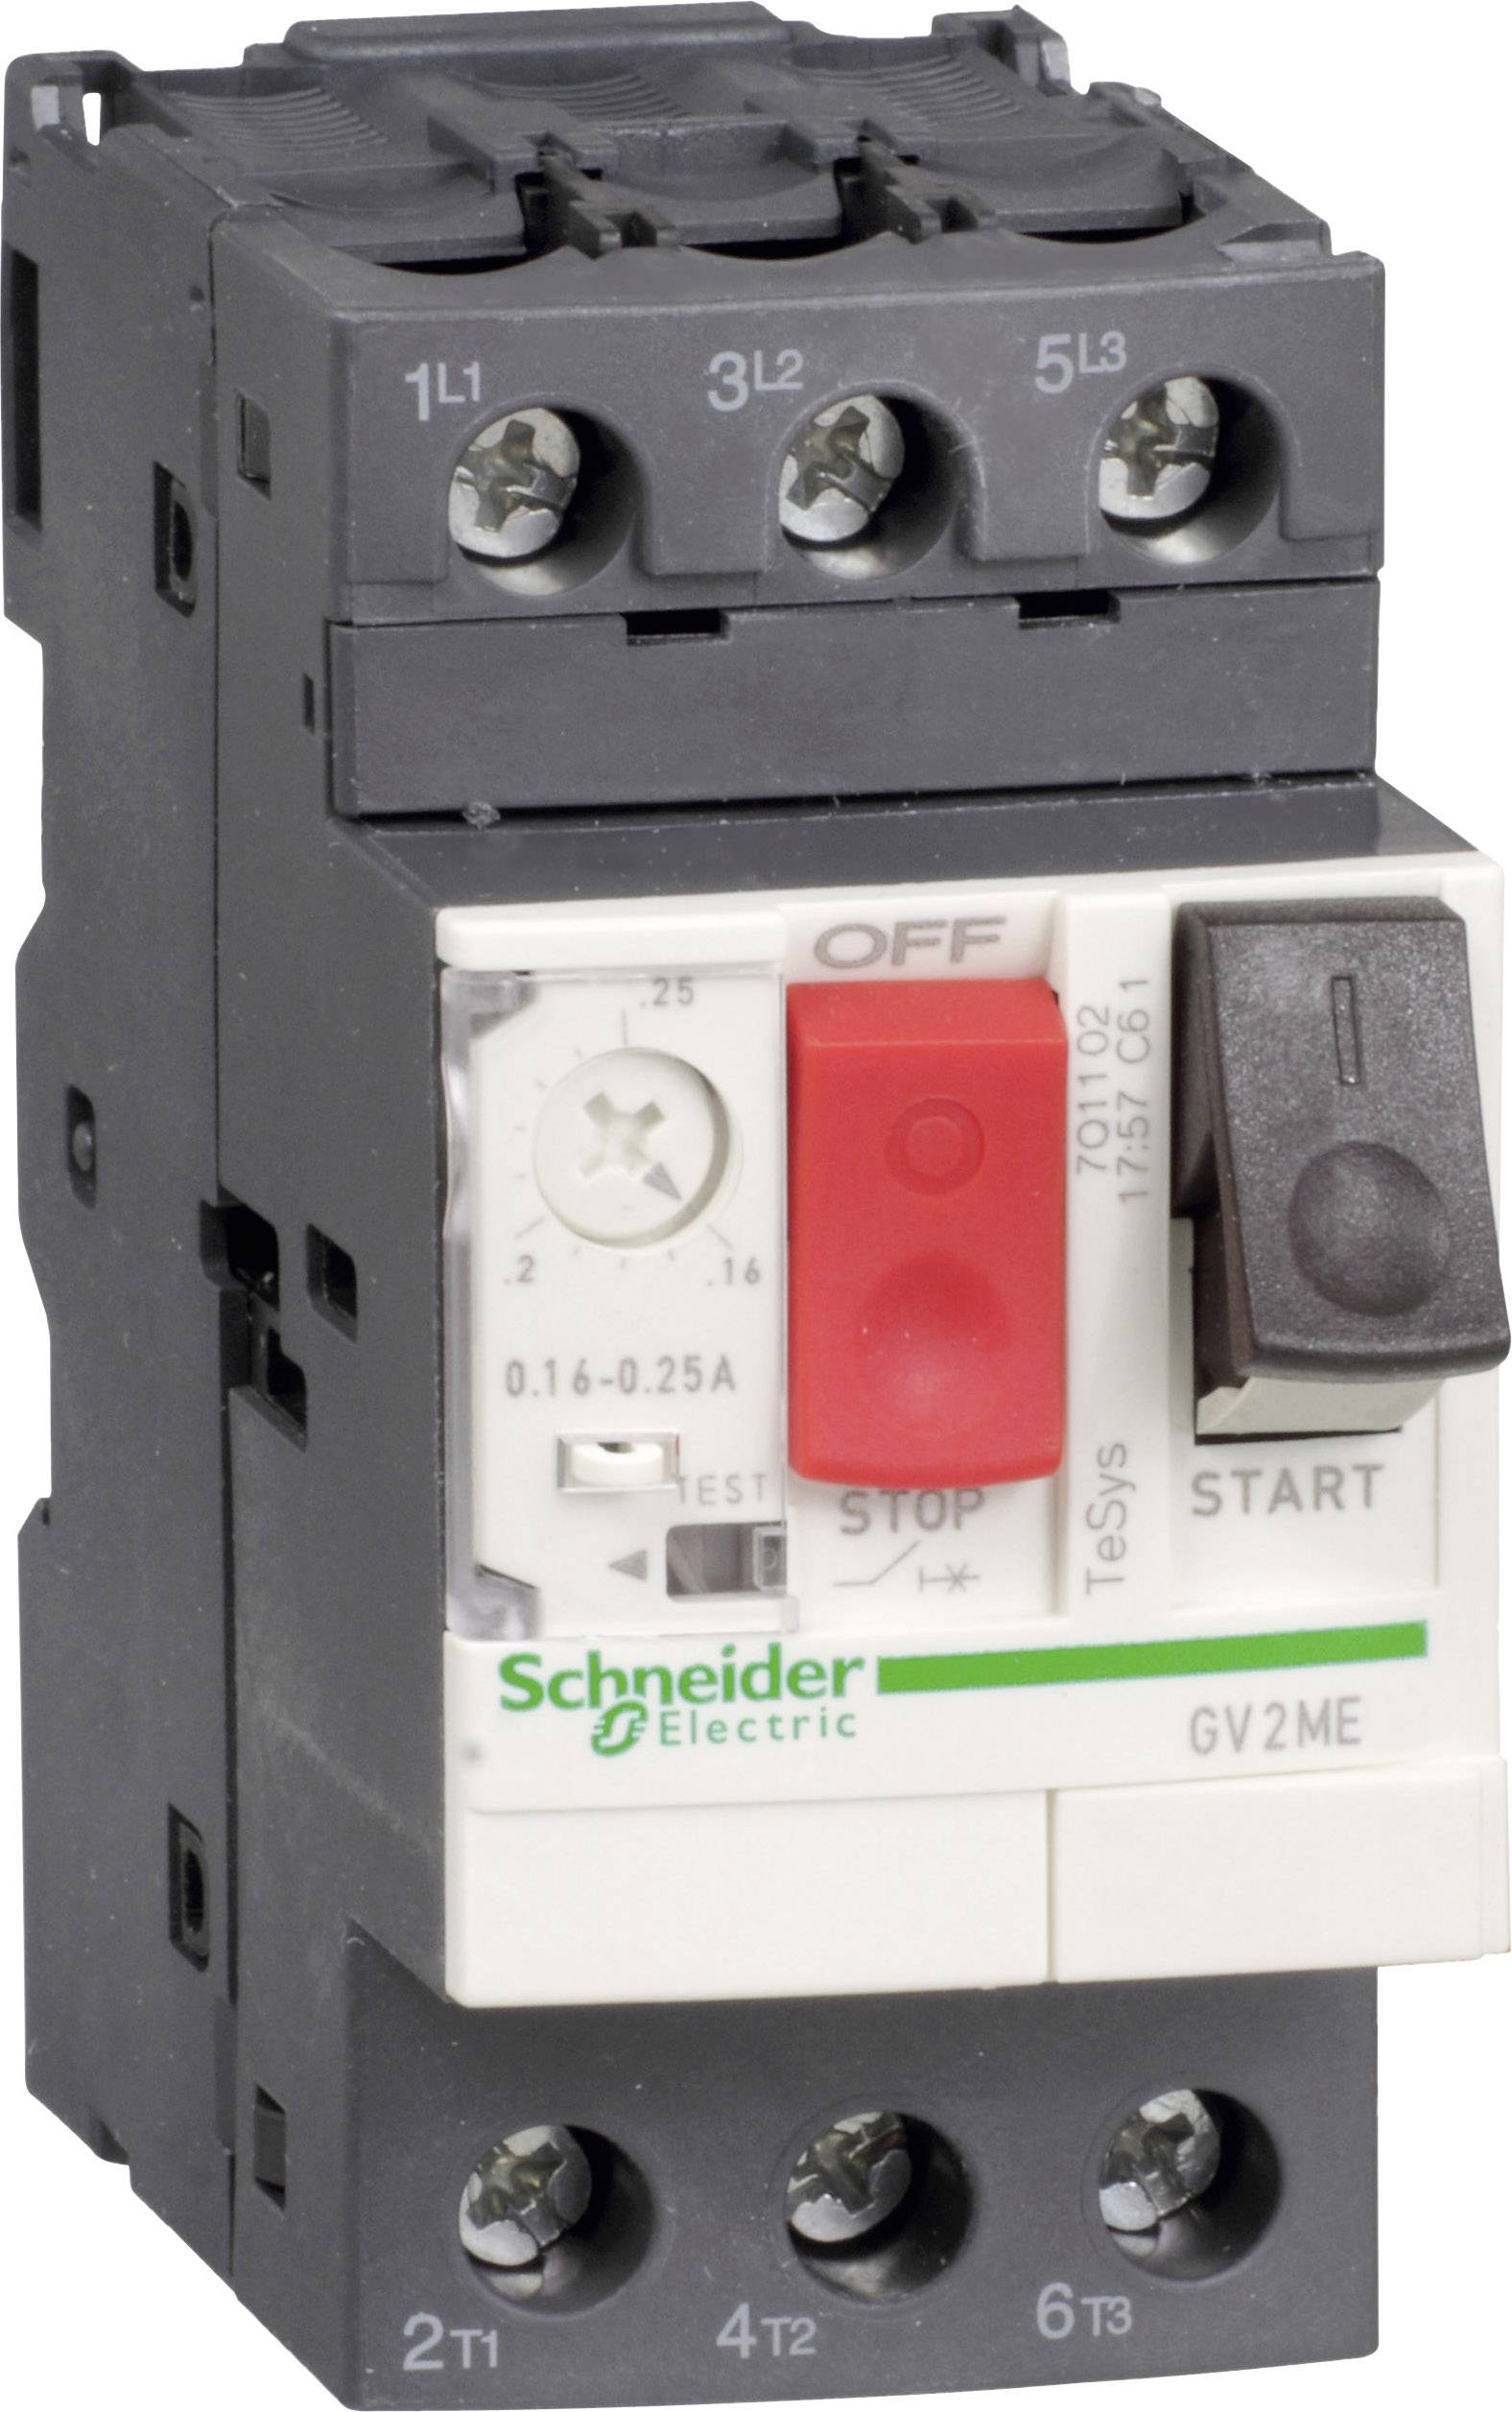 SCHNEIDER ELECTRIC GV2ME 3P Stromunterbrecher (GV2ME03)